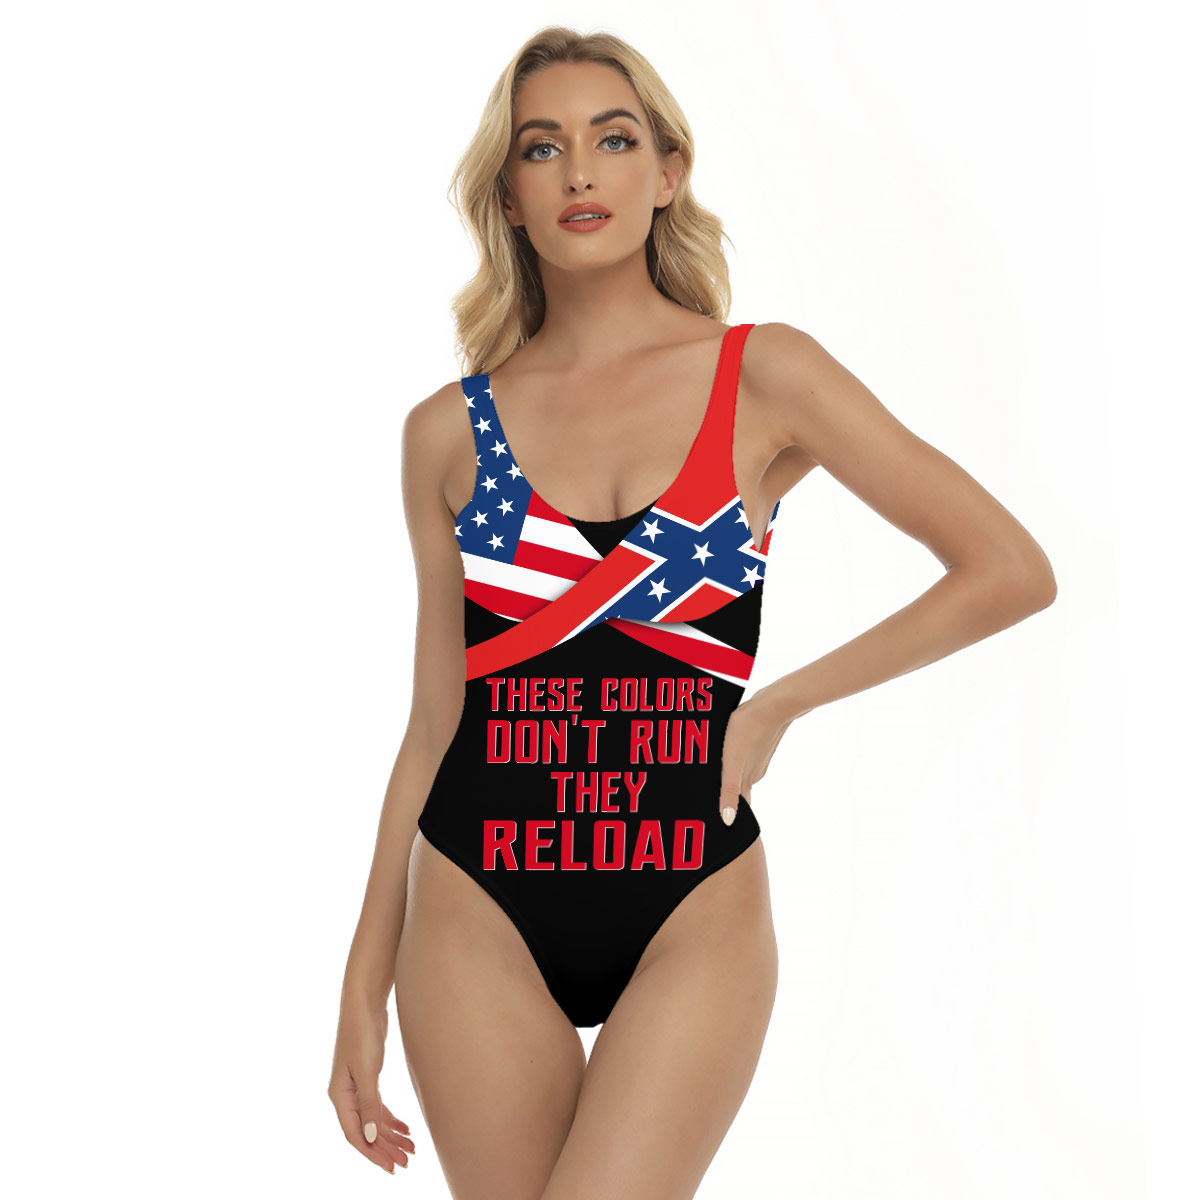 https://rosateeshop.com/wp-content/uploads/2022/07/confederate-flag-bikini-rebel-bathing-suit-swimsuit-qfaa280702-2.jpg